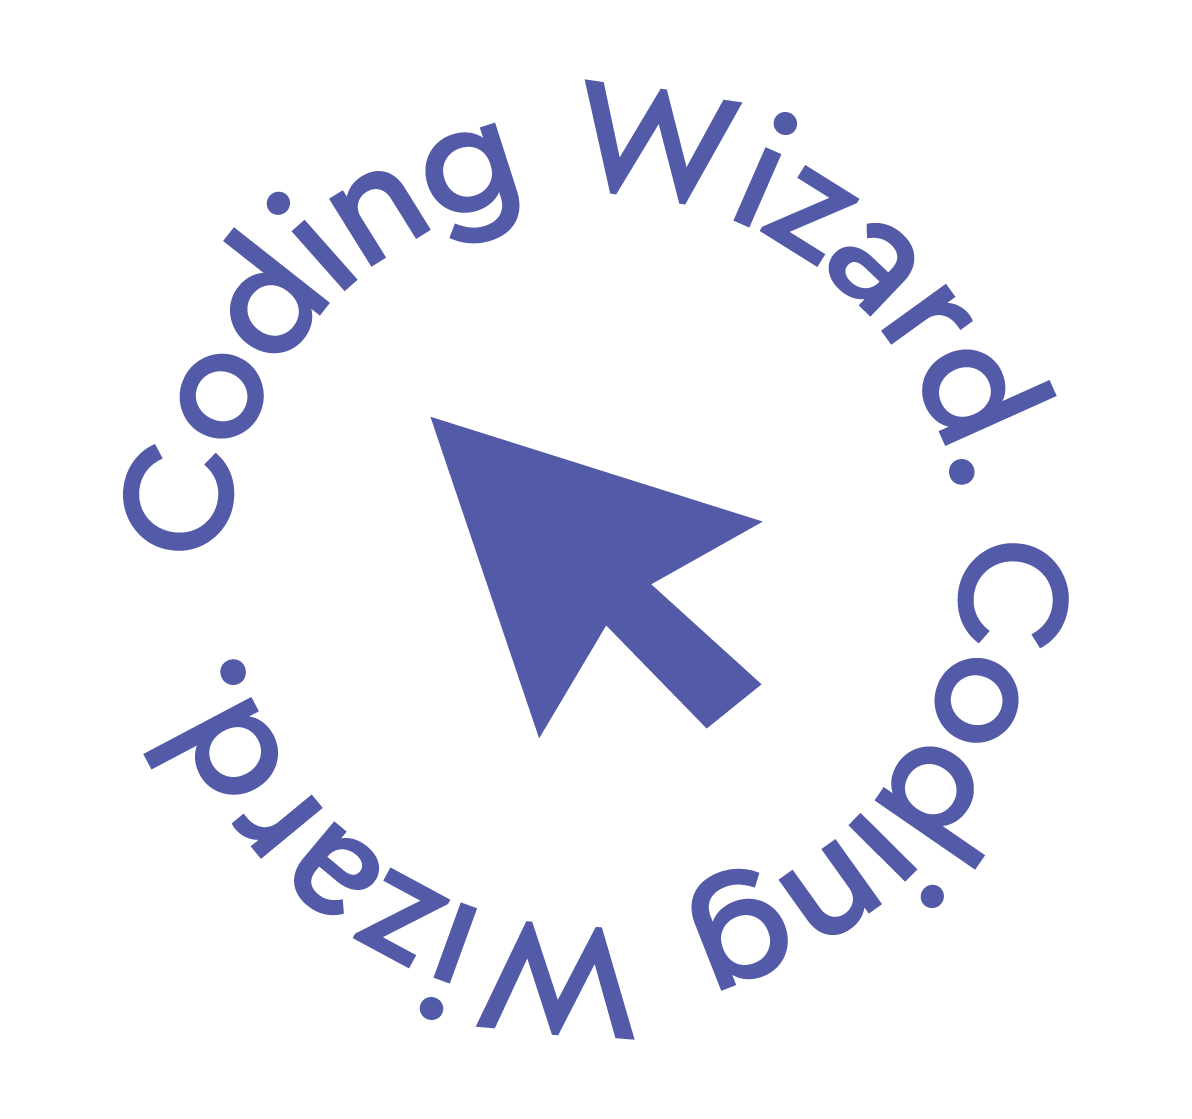 Coding Wizard